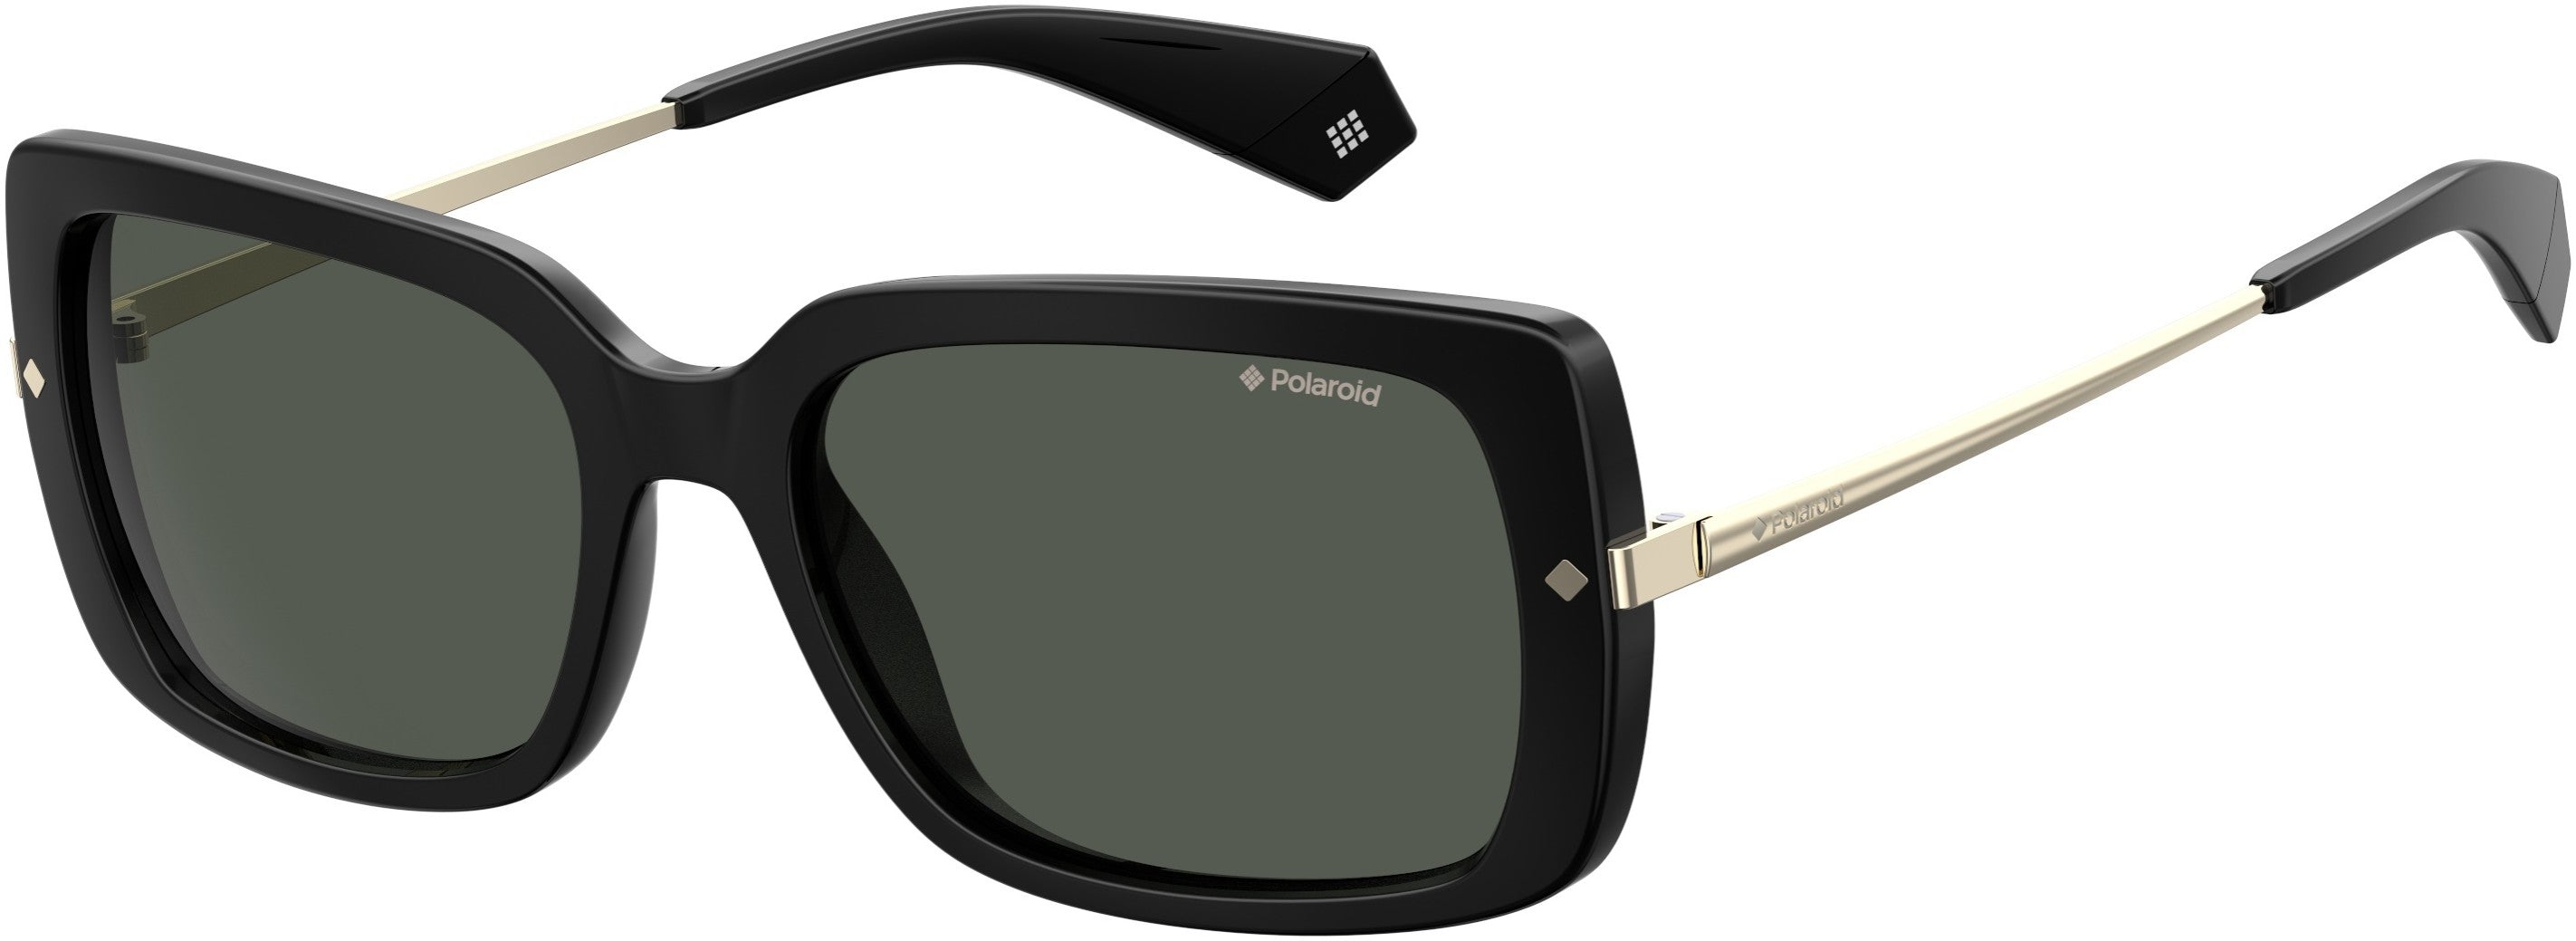 Polaroid Core Polaroid 4075/S Rectangular Sunglasses 0807-0807  Black (M9 Gray Pz)